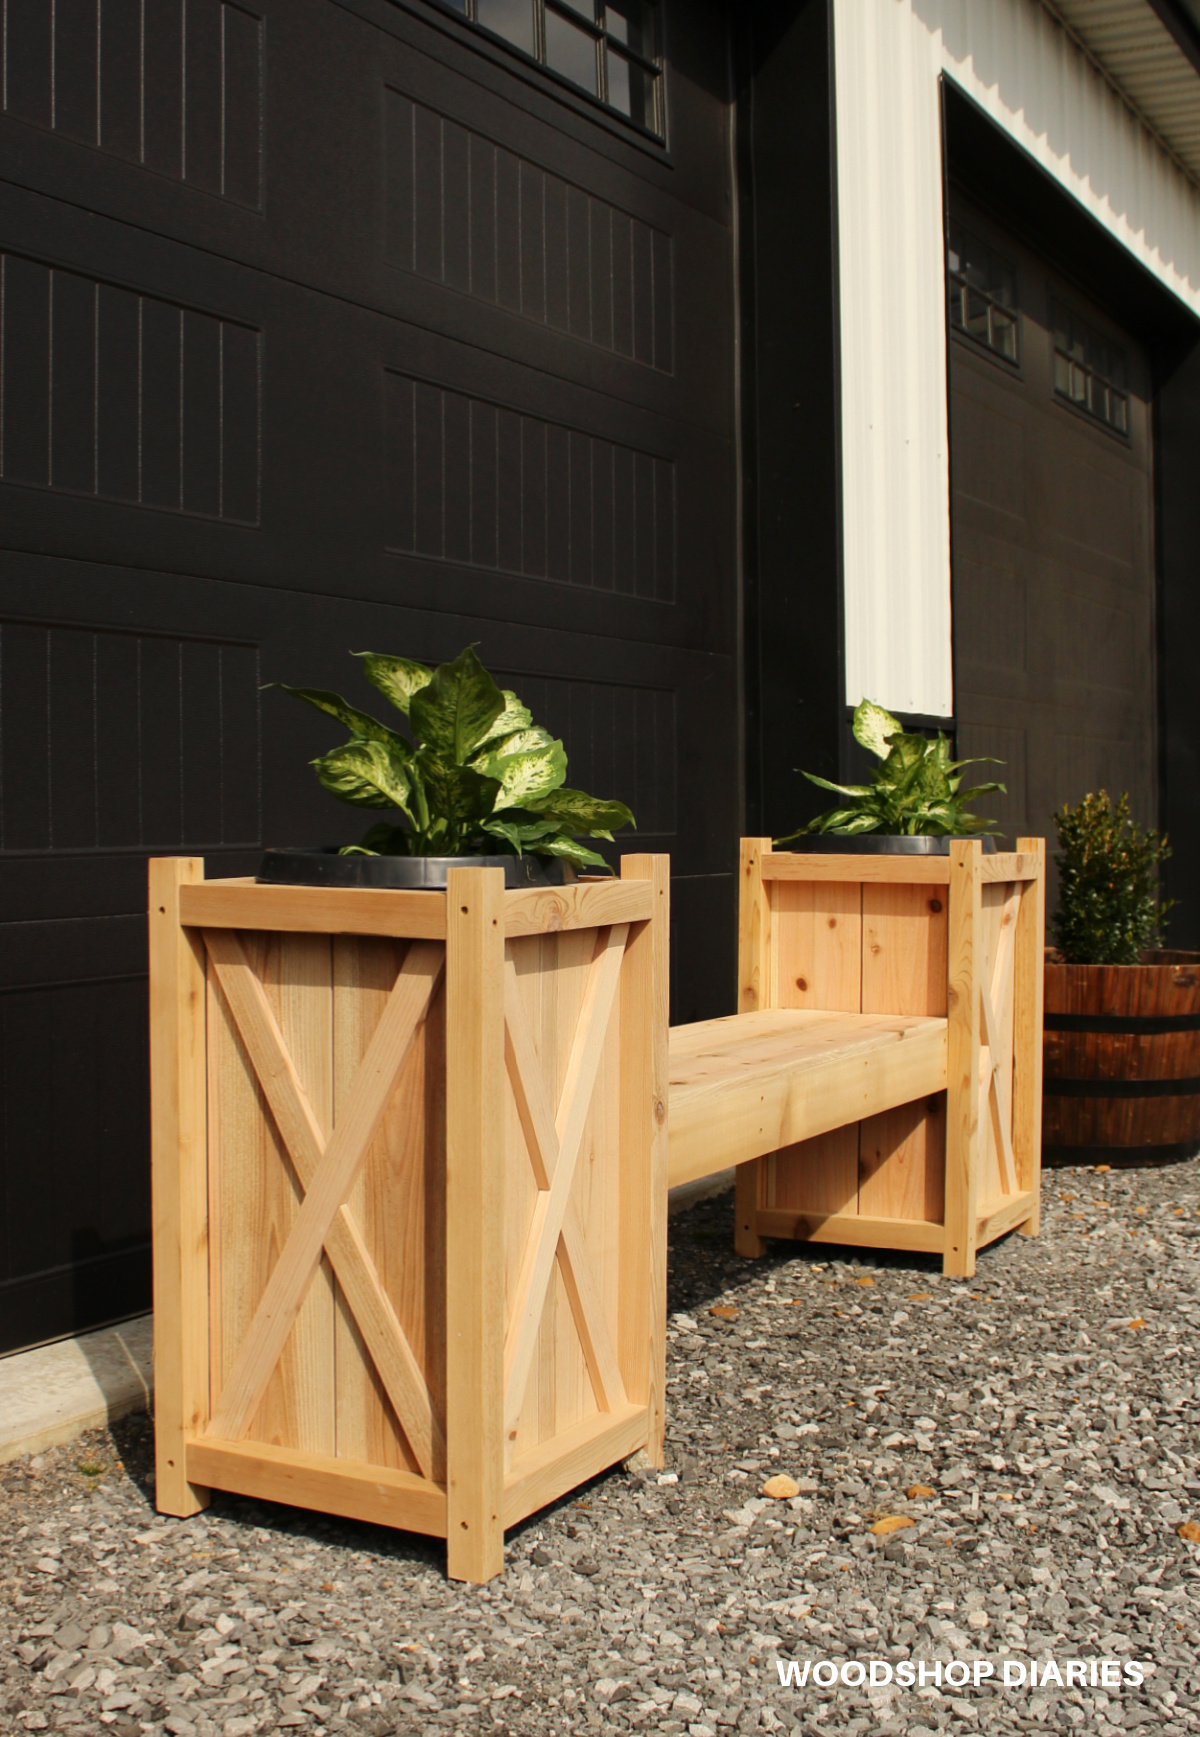 Close up look at DIY wooden planter bench sitting in front of garage door